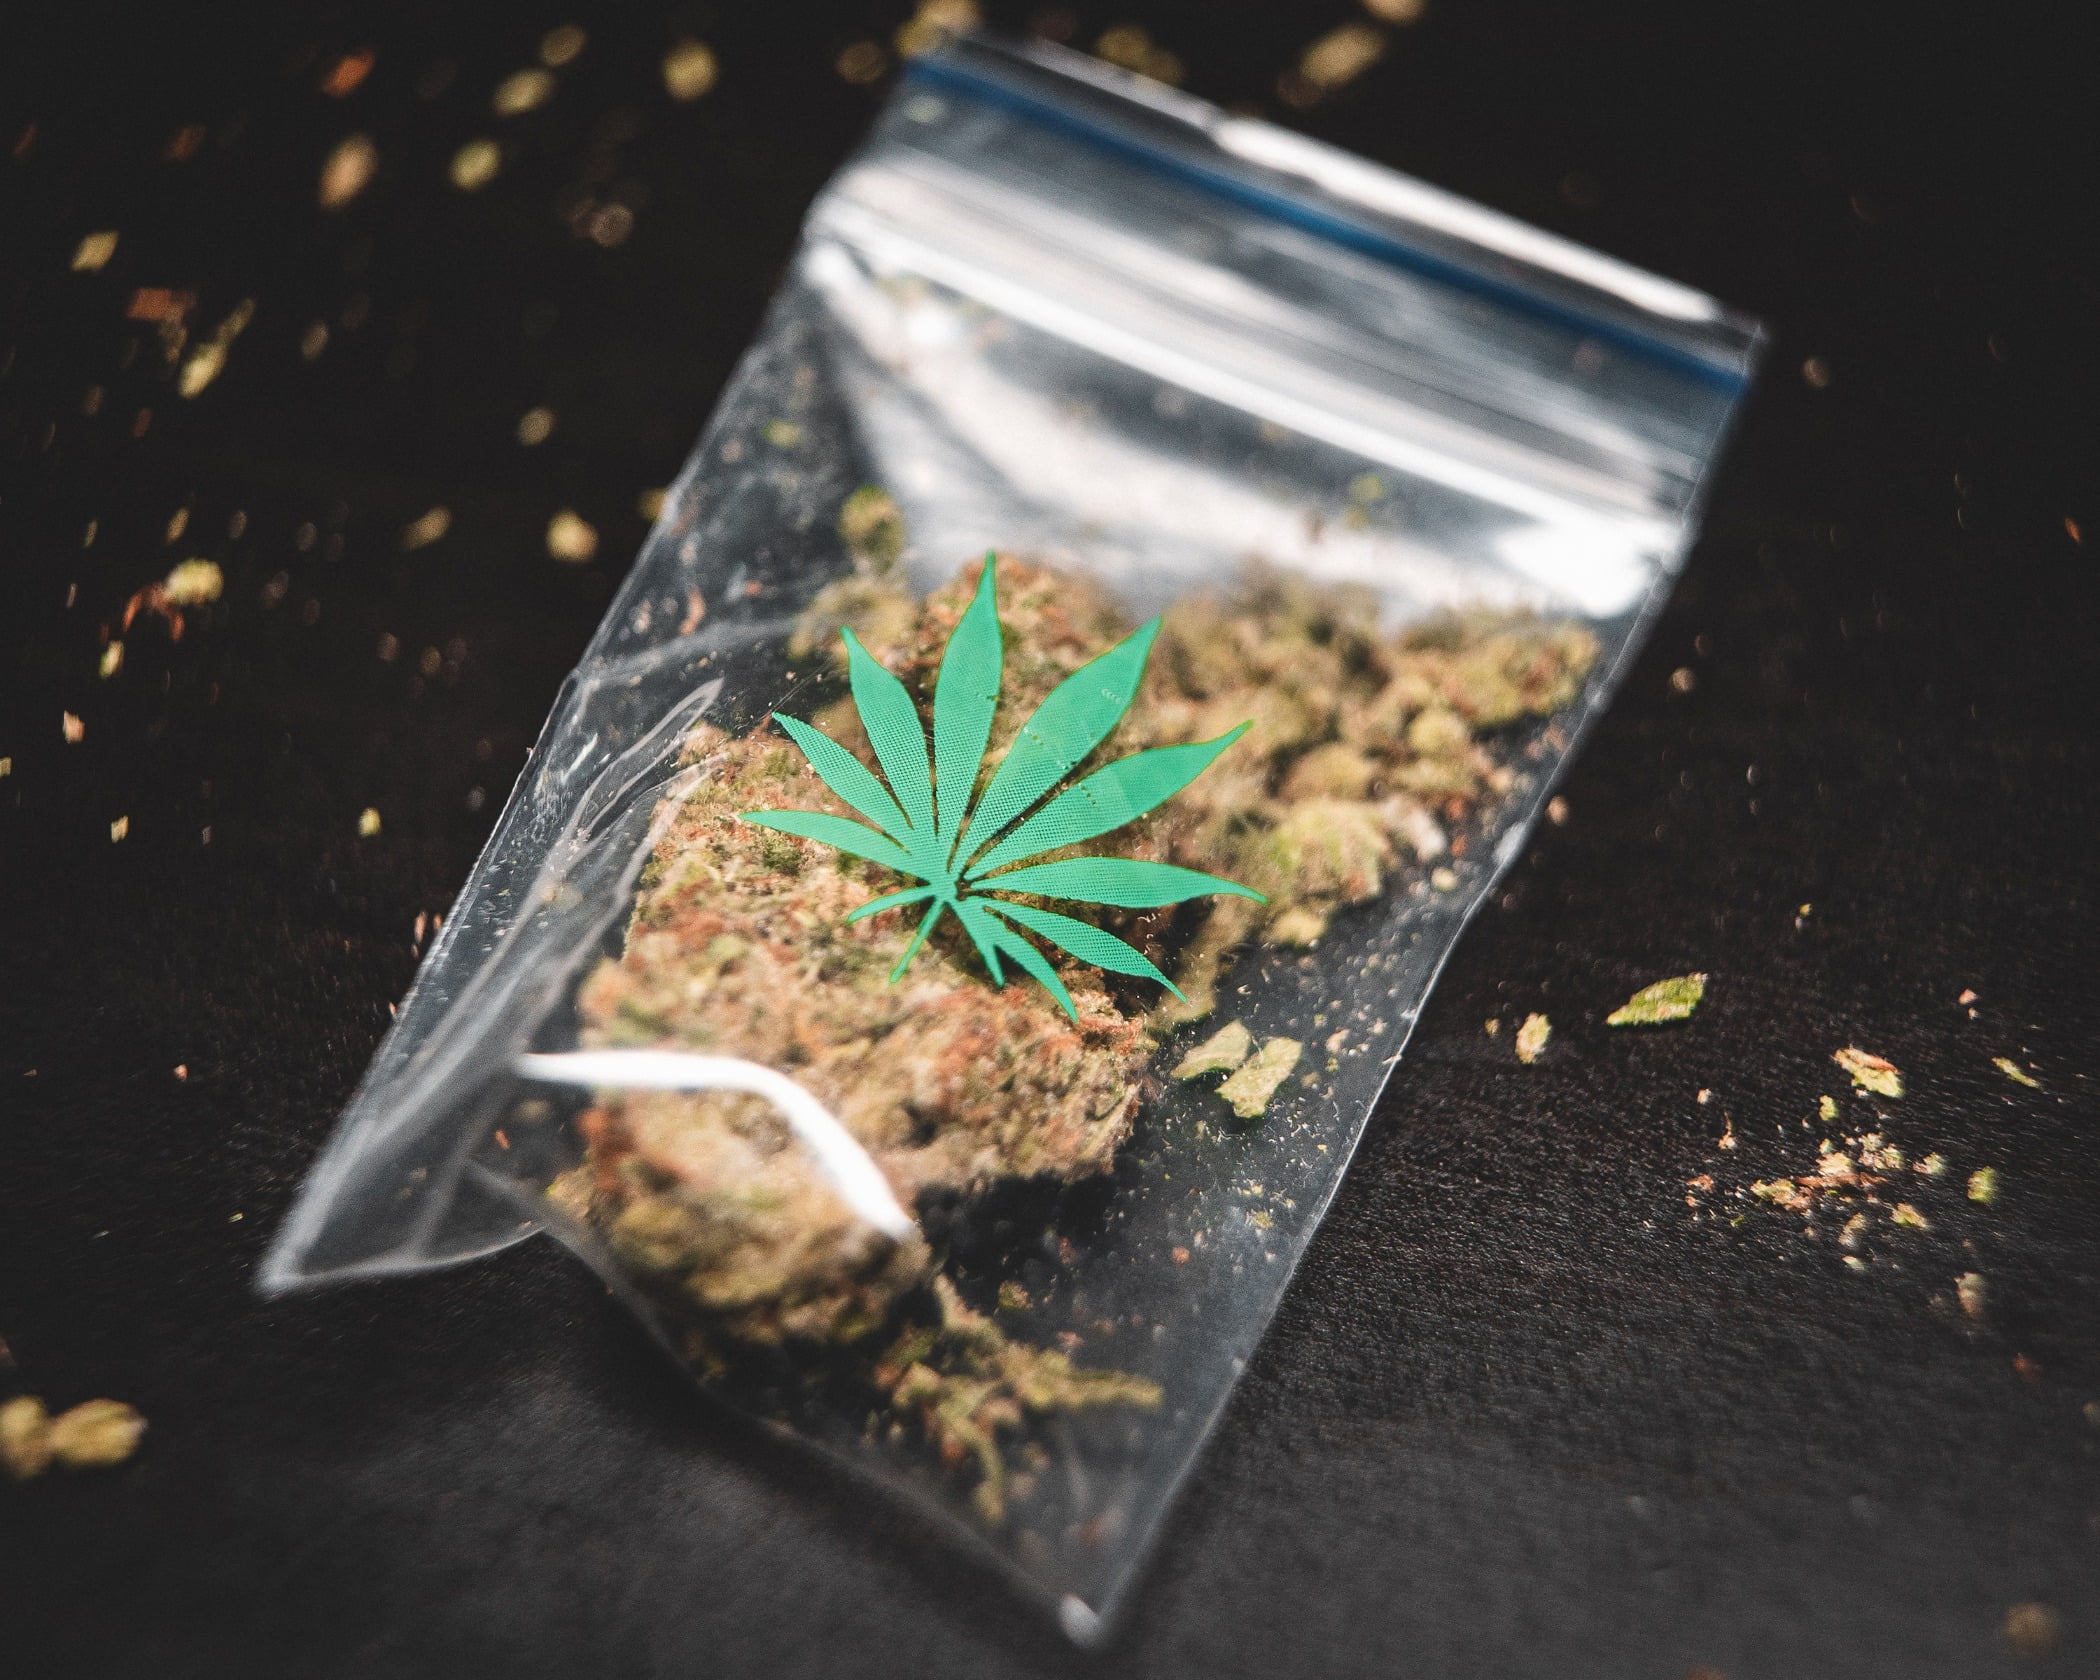 Cannabis in flexible packaging